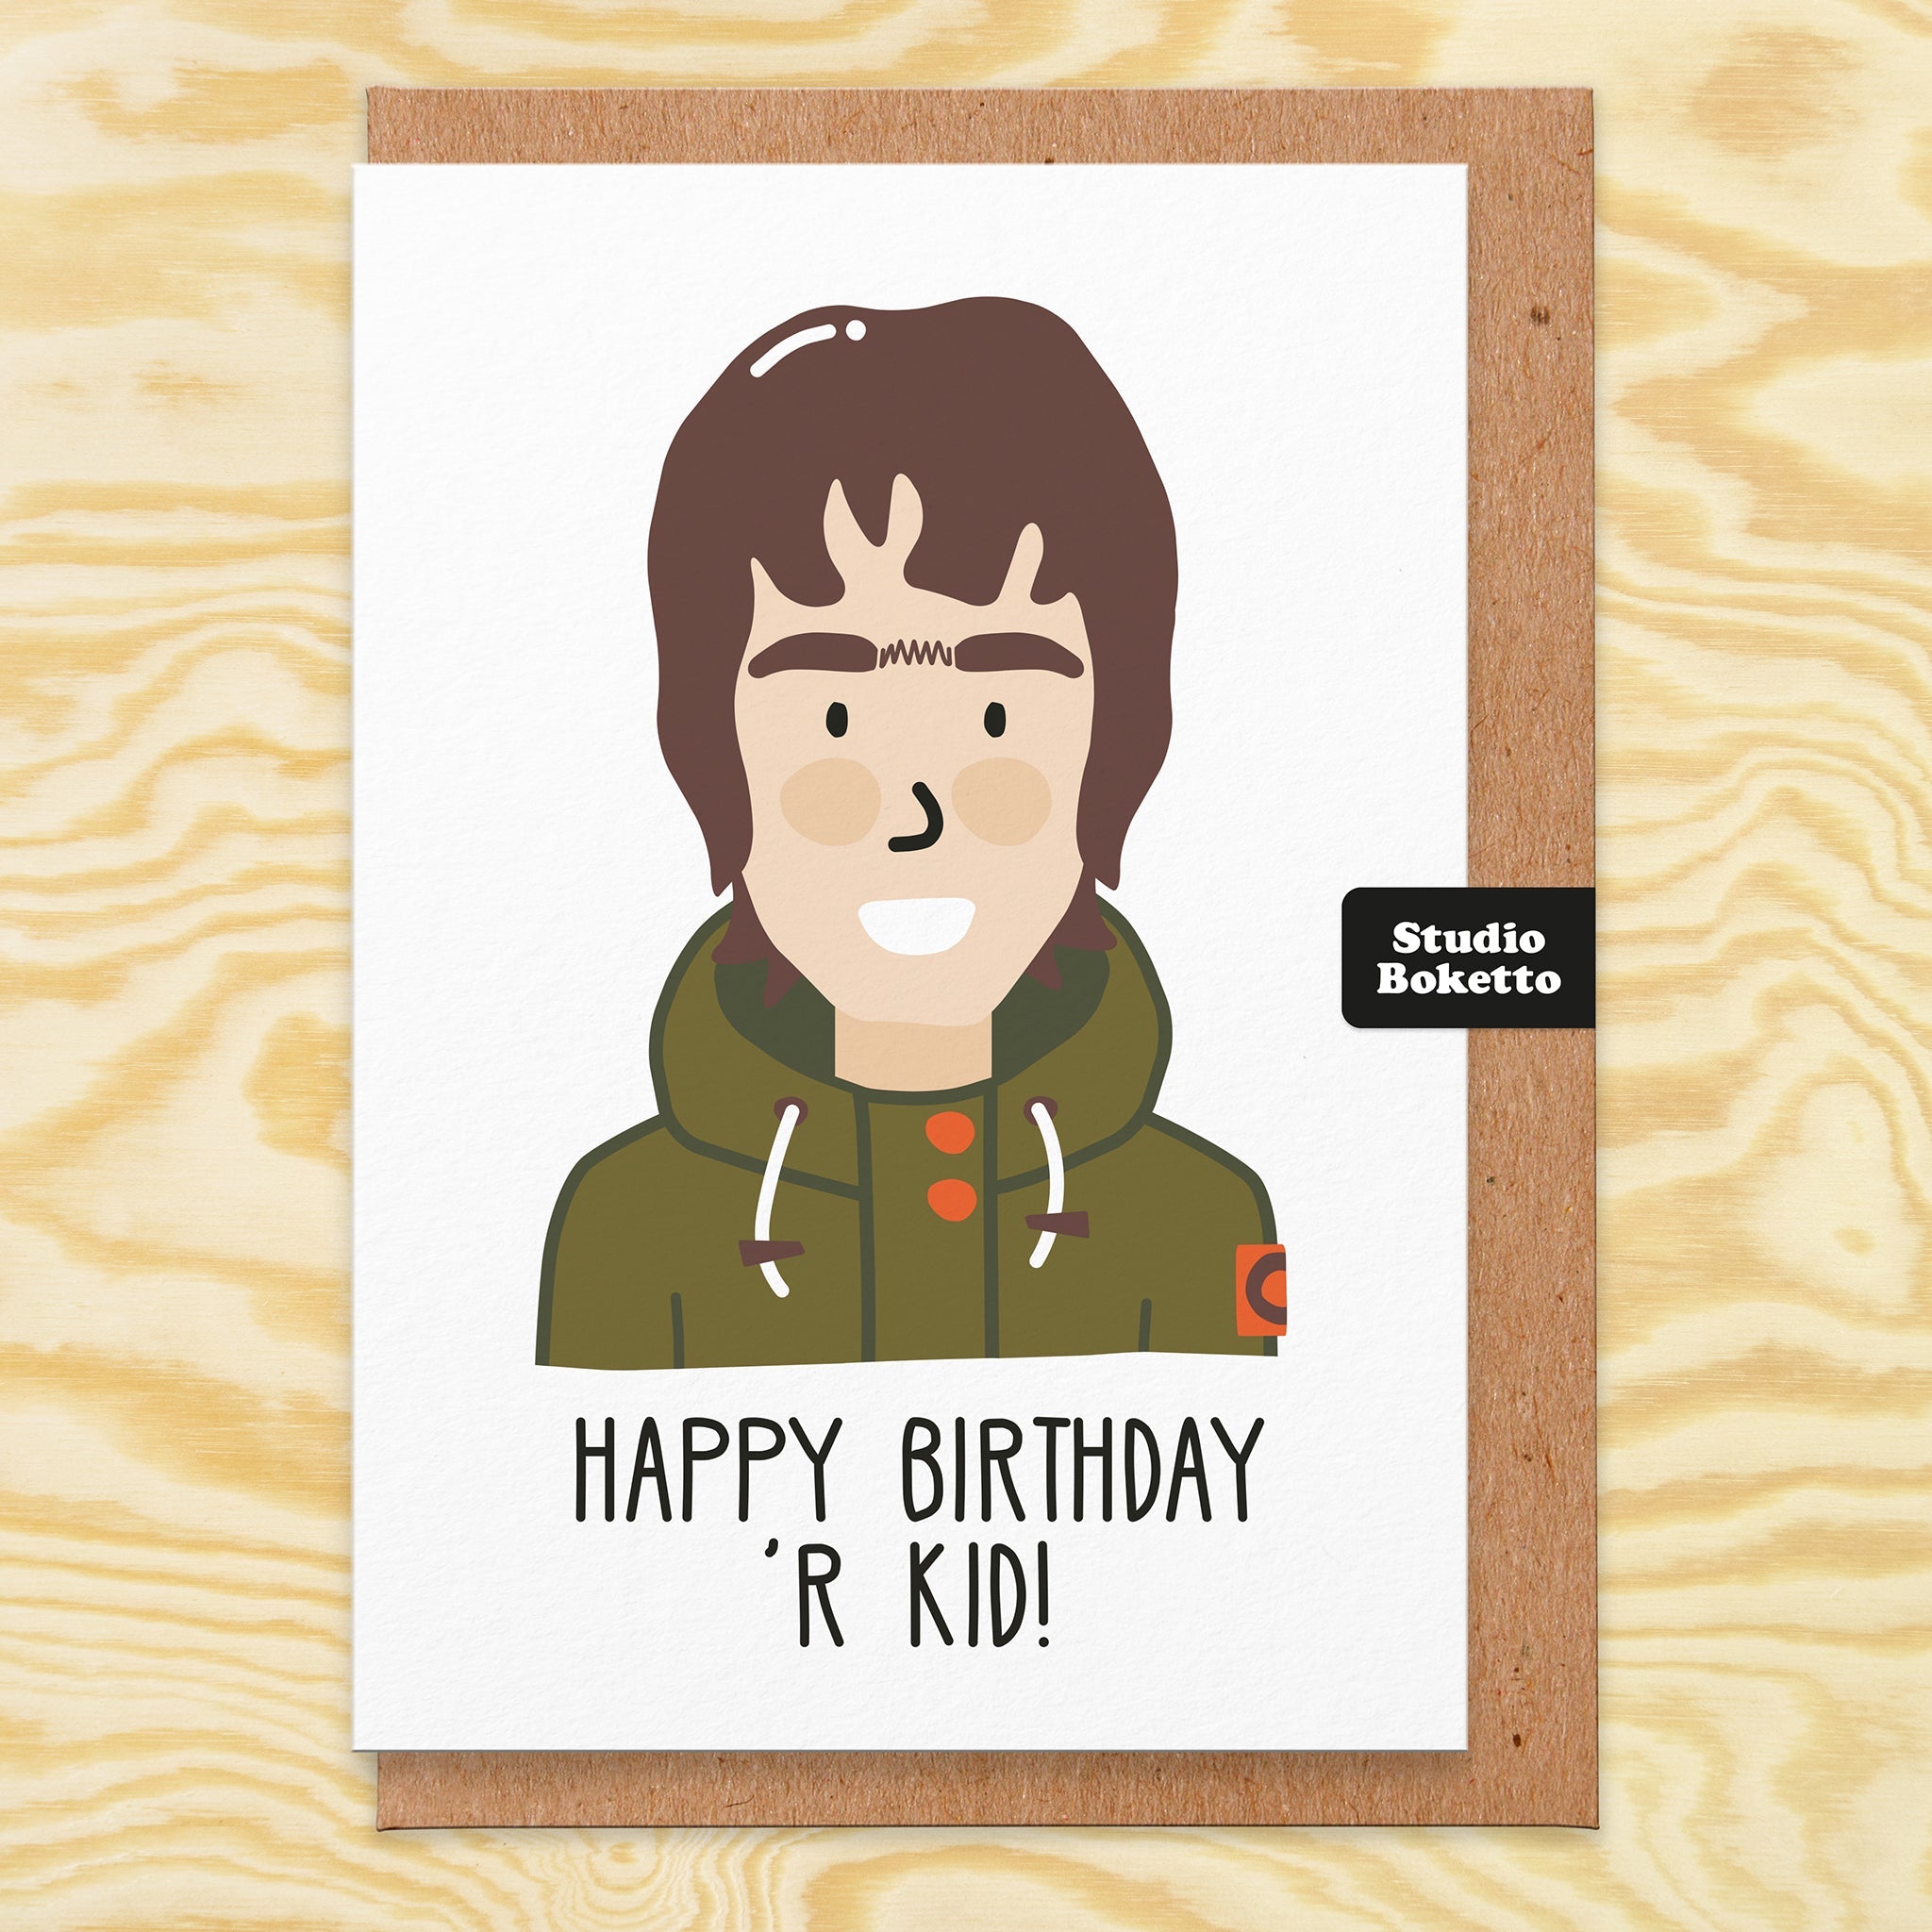 Liam Gallagher Birthday Card, made in England